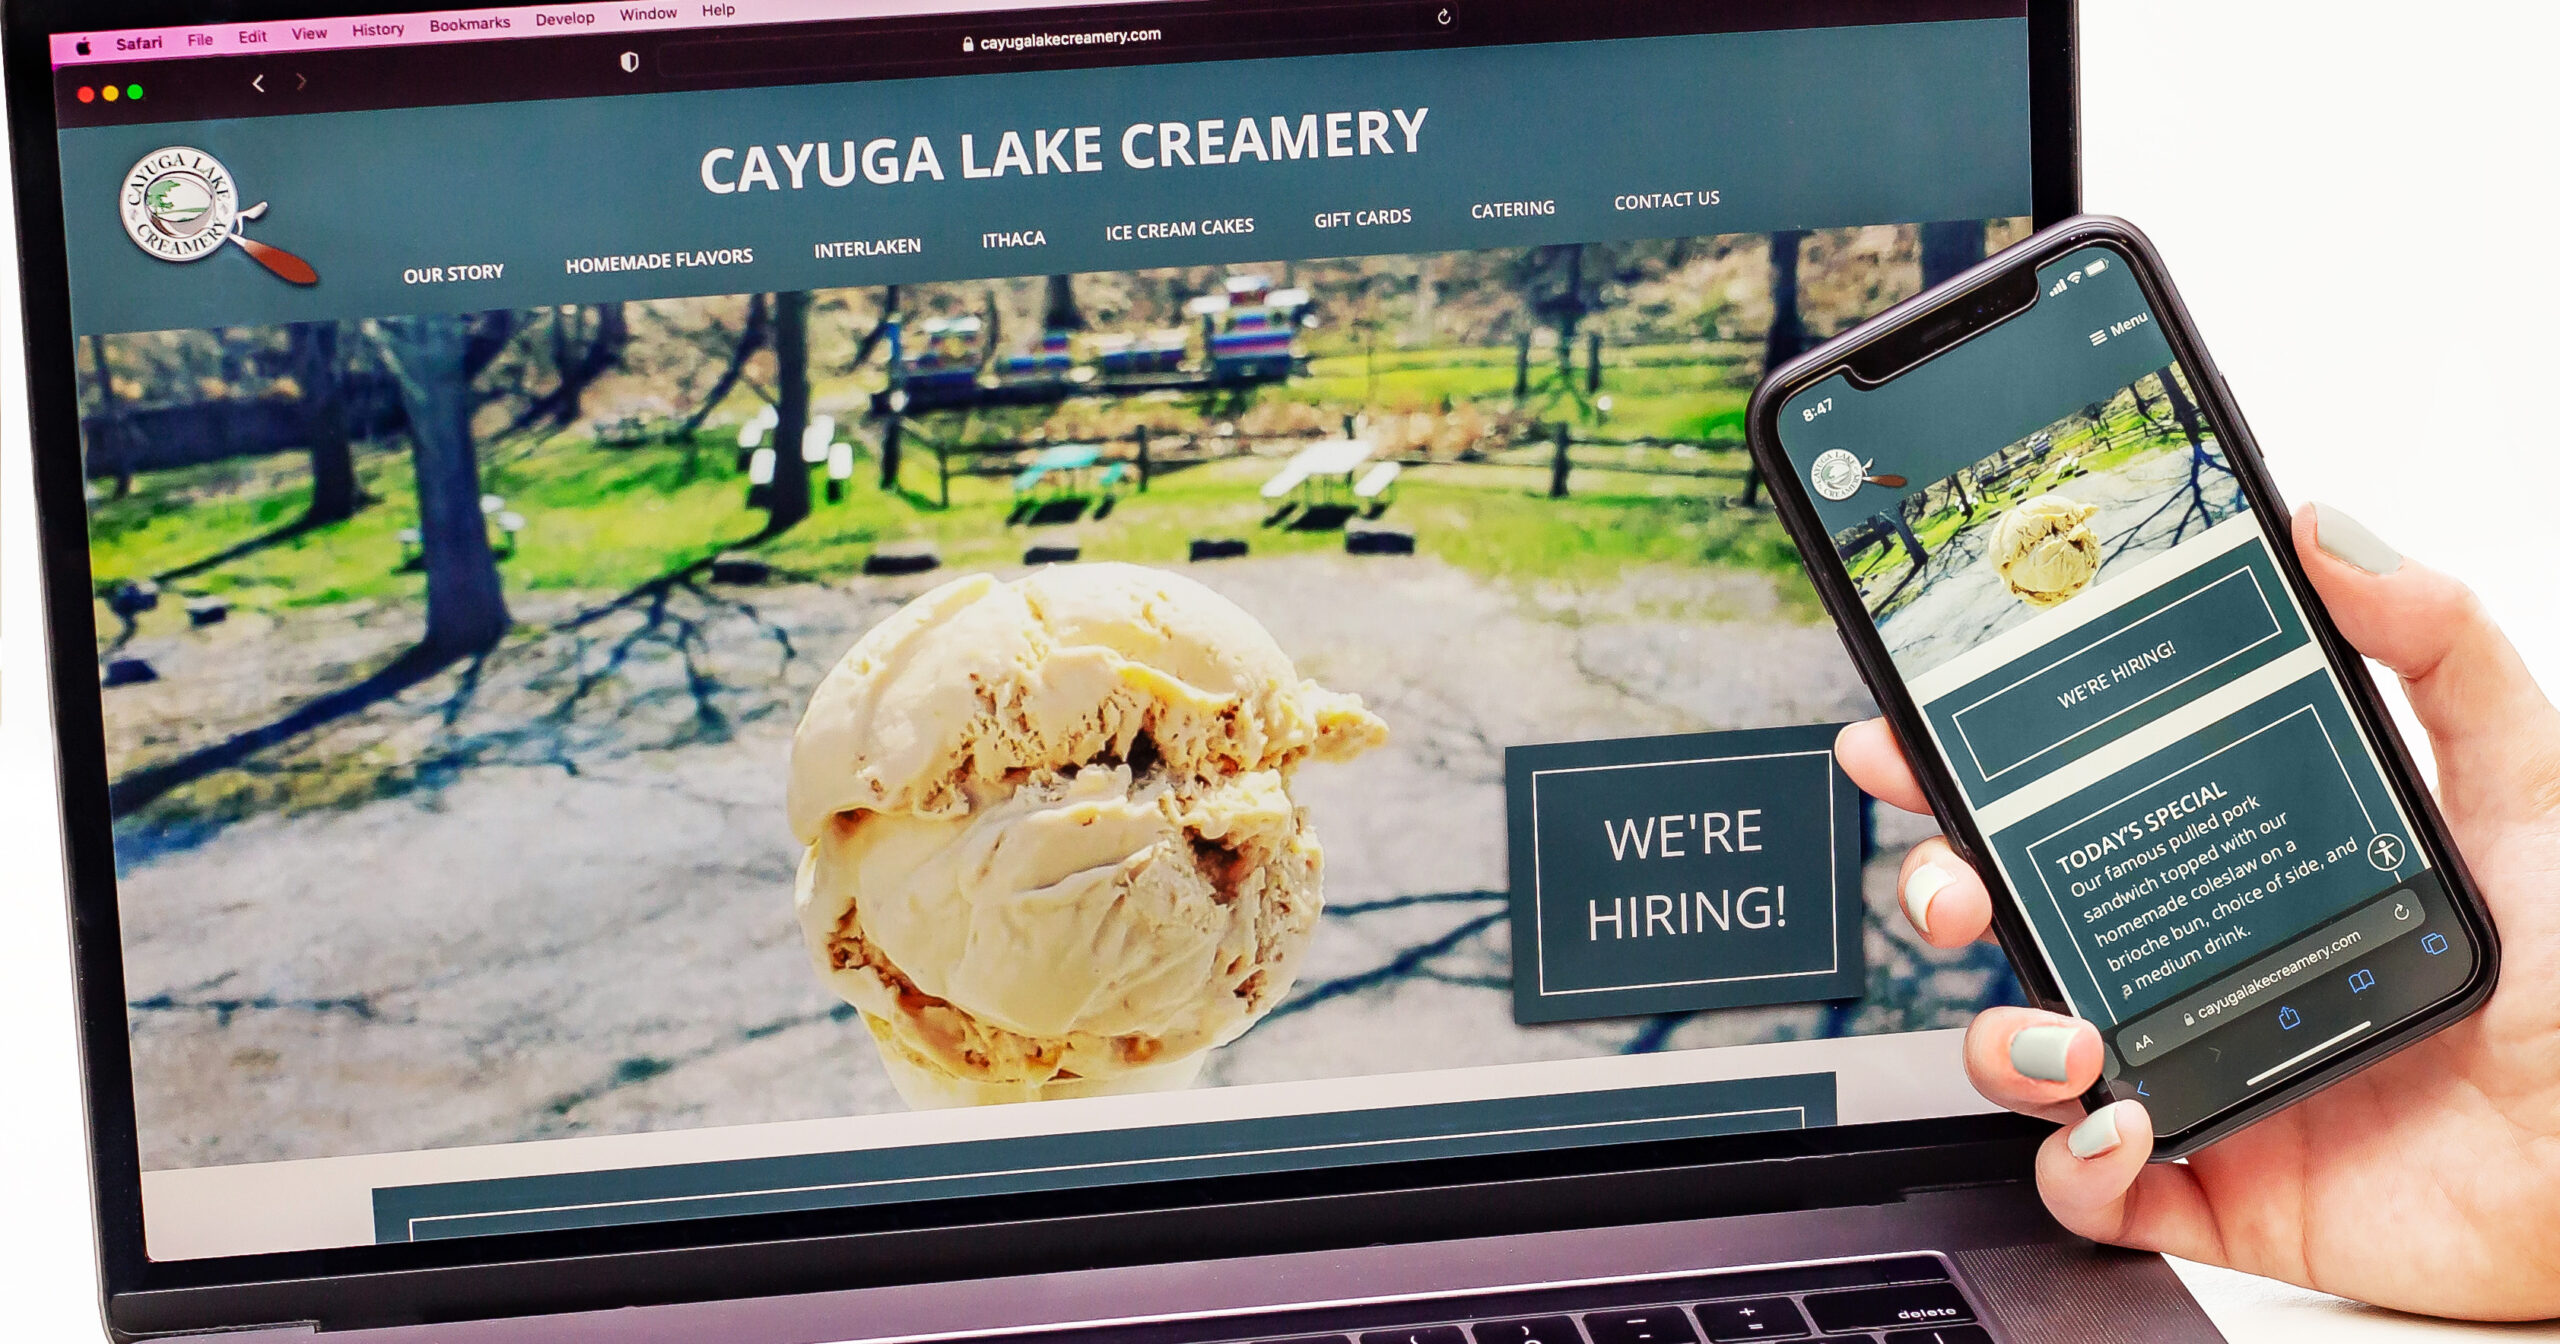 Cayuga Lake Creamery News Website Launch